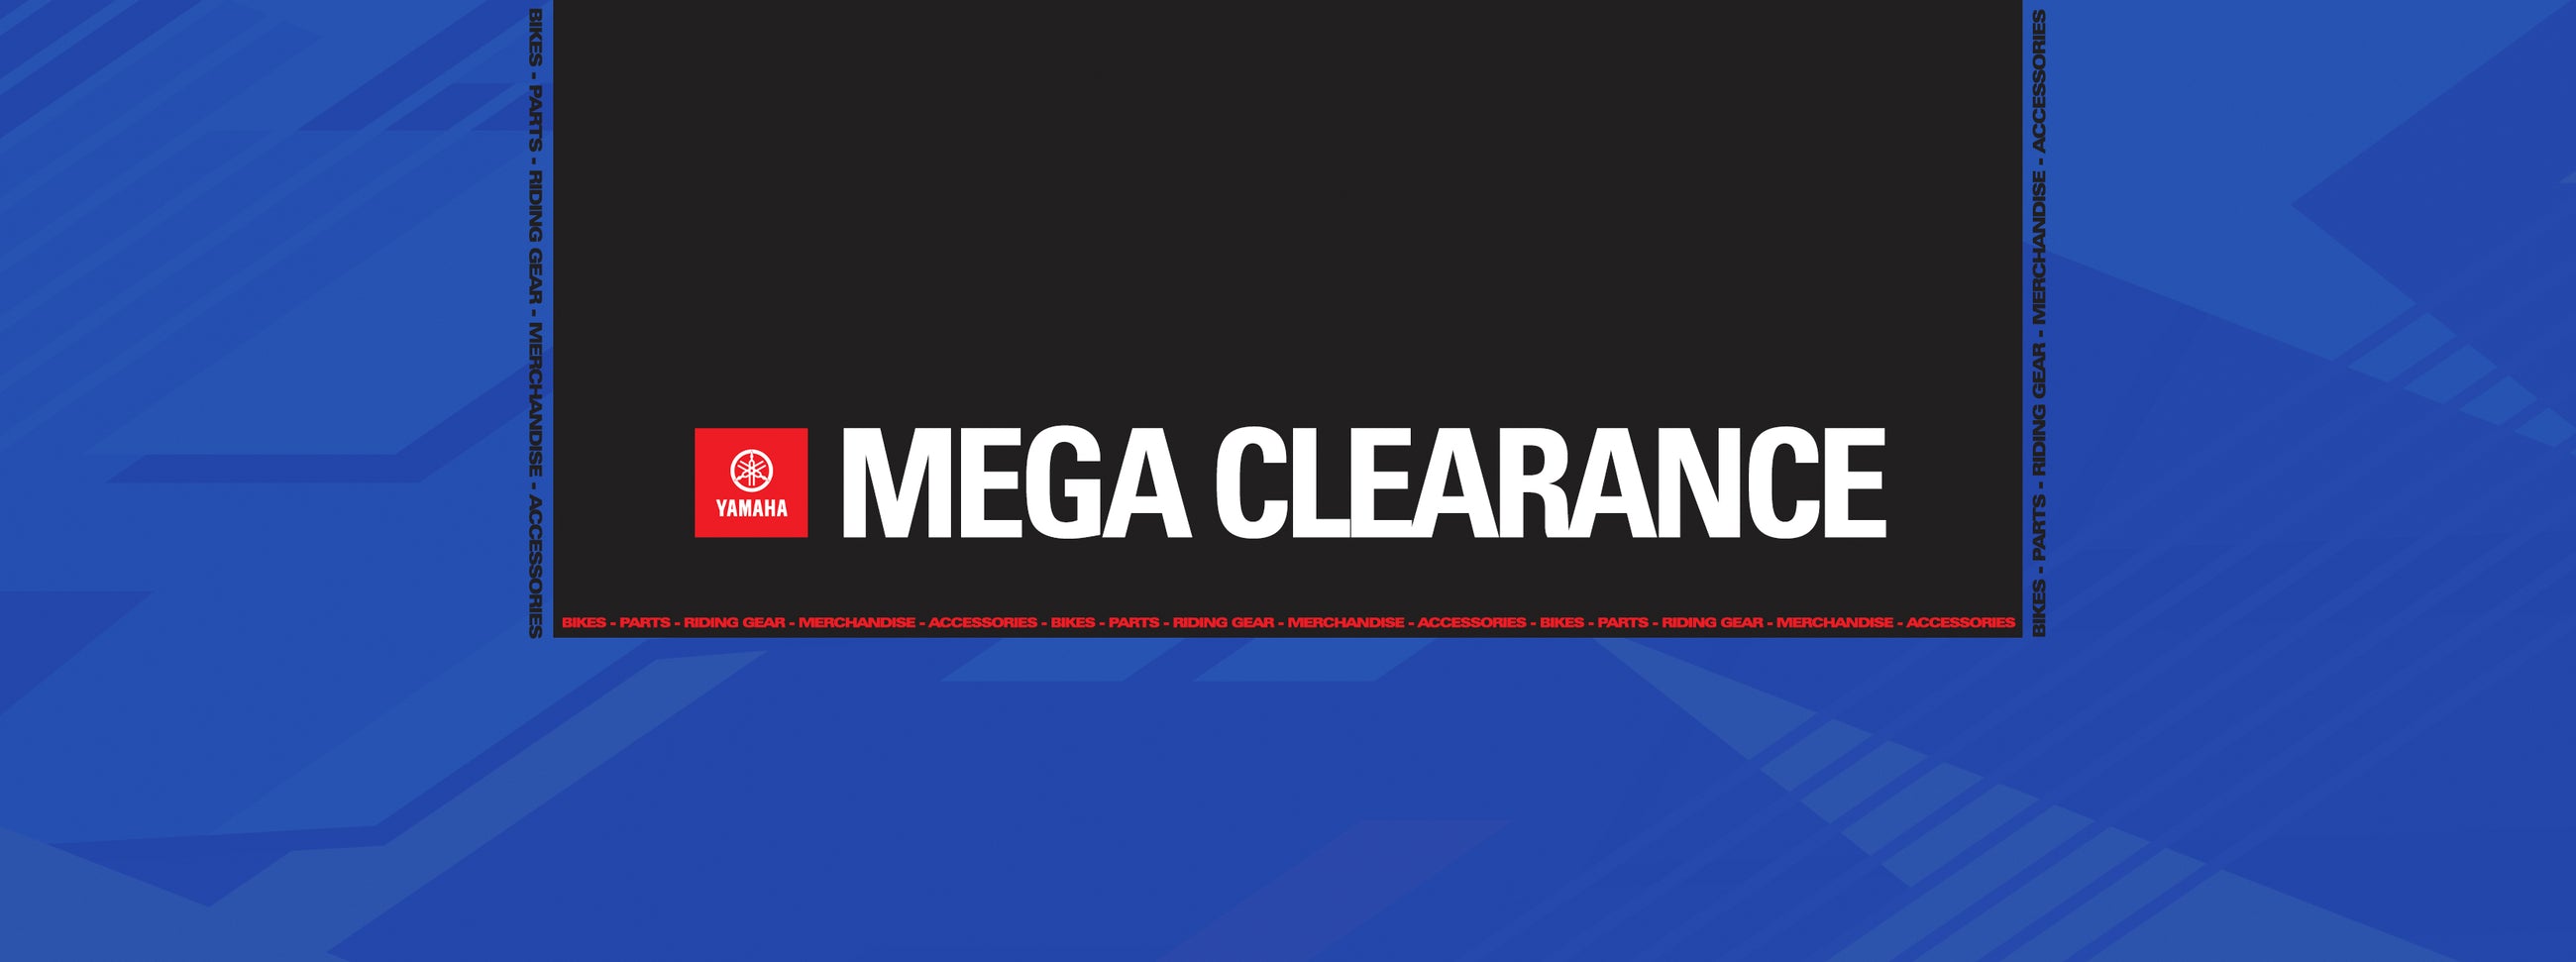 Yamaha Clearance Sale - 50% off